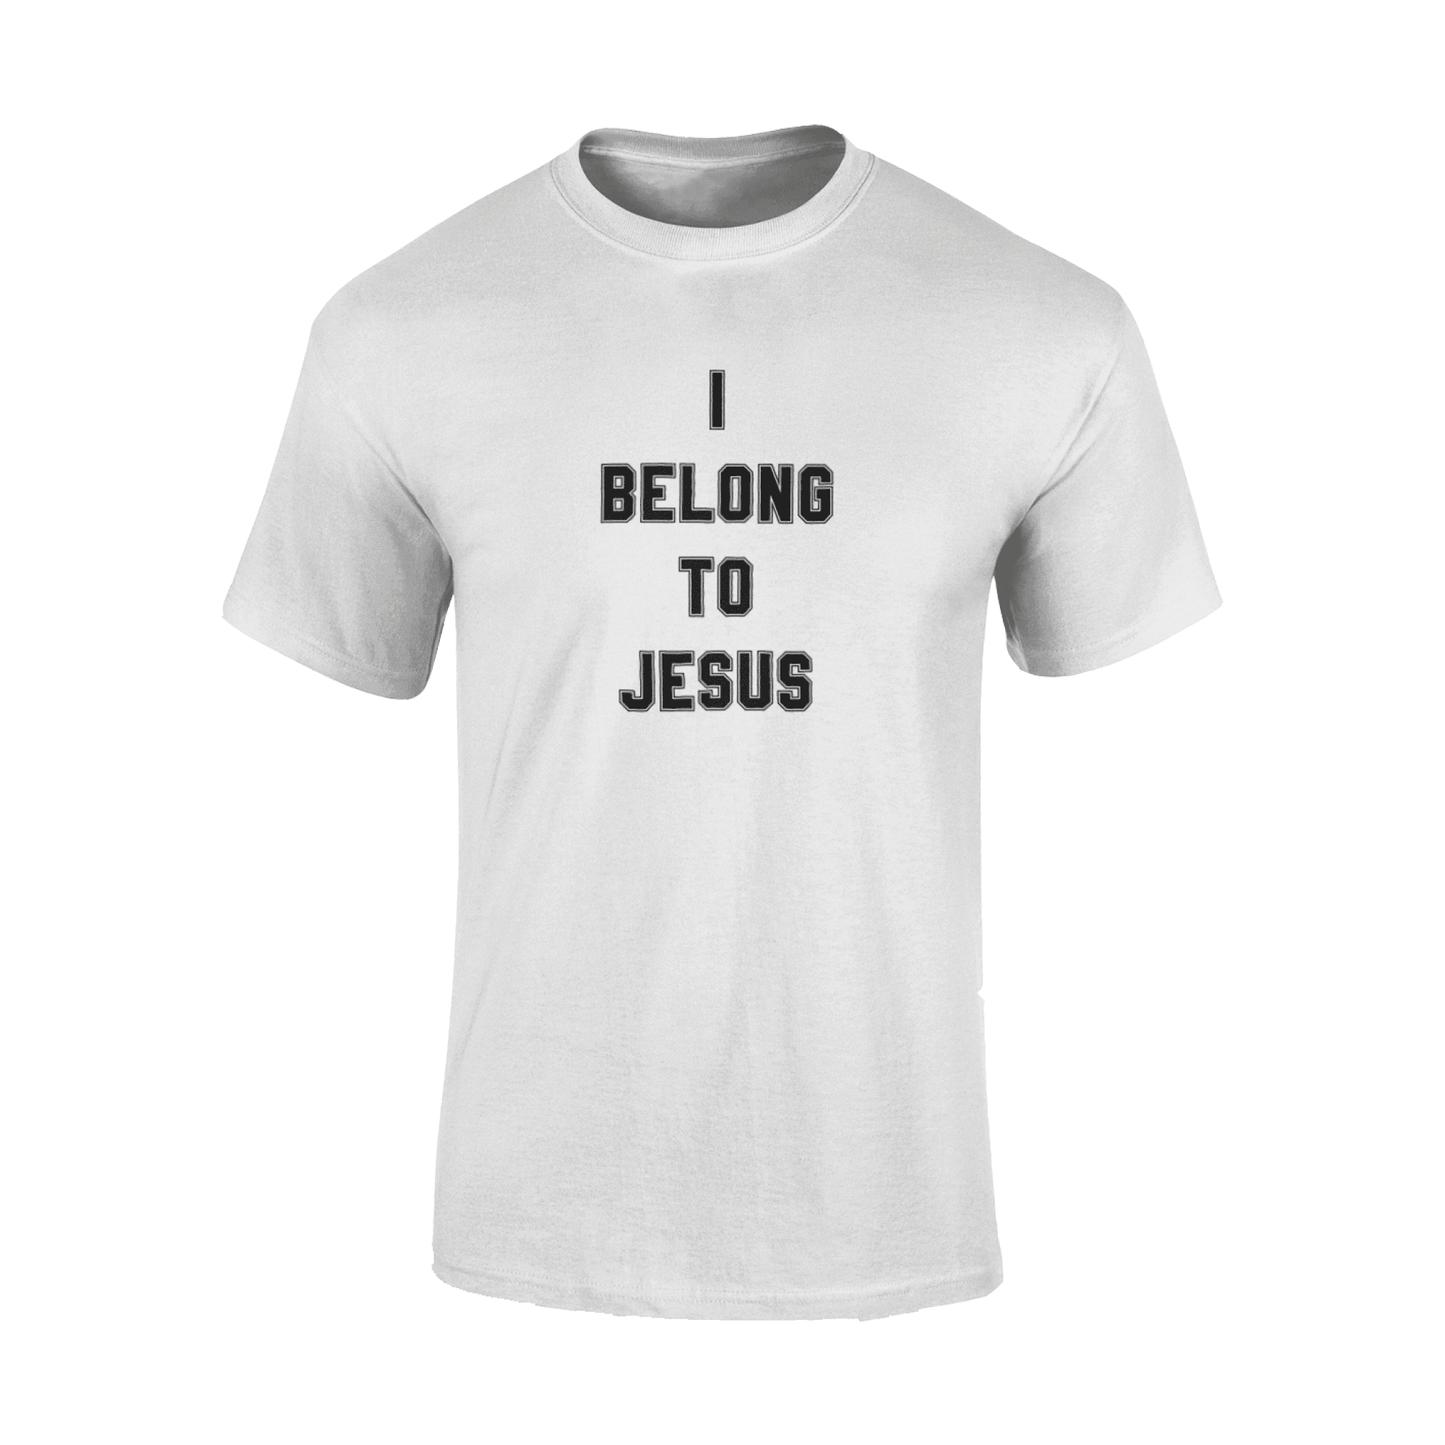 Kaka I Belong To Jesus T-Shirt